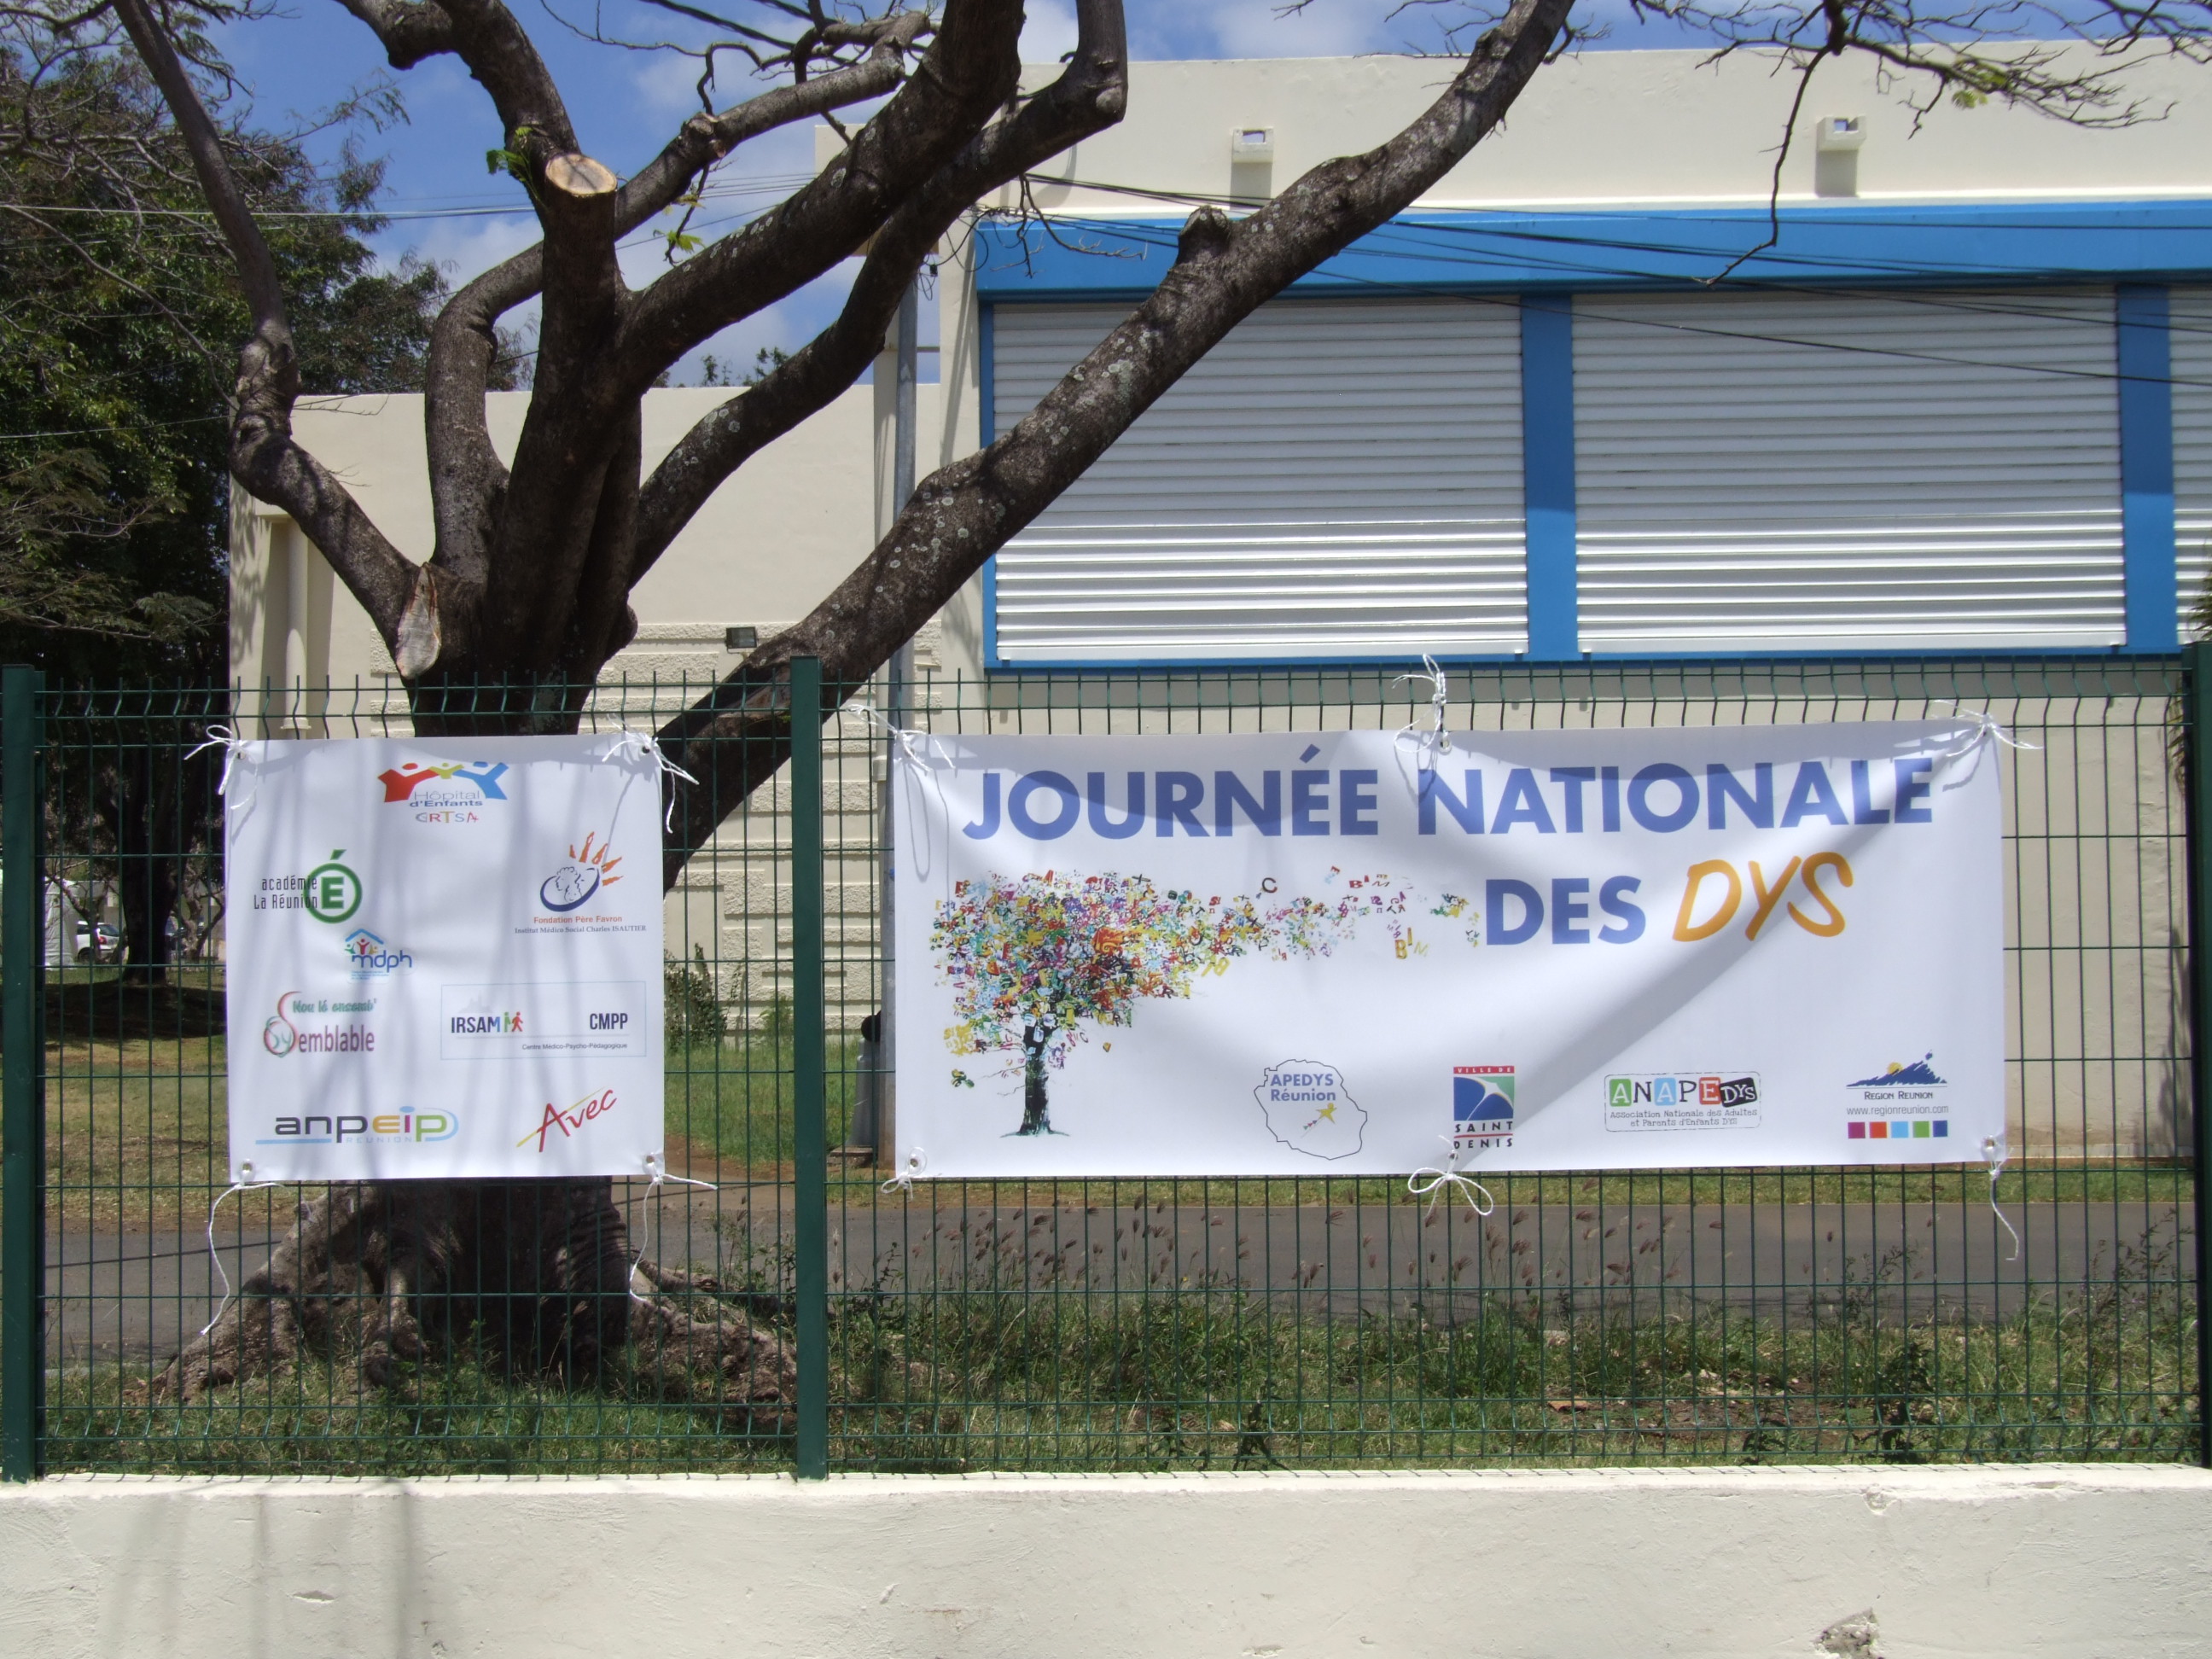 Photo Journee Nationale des Dys 2015 - 2 - Banderoles.JPG